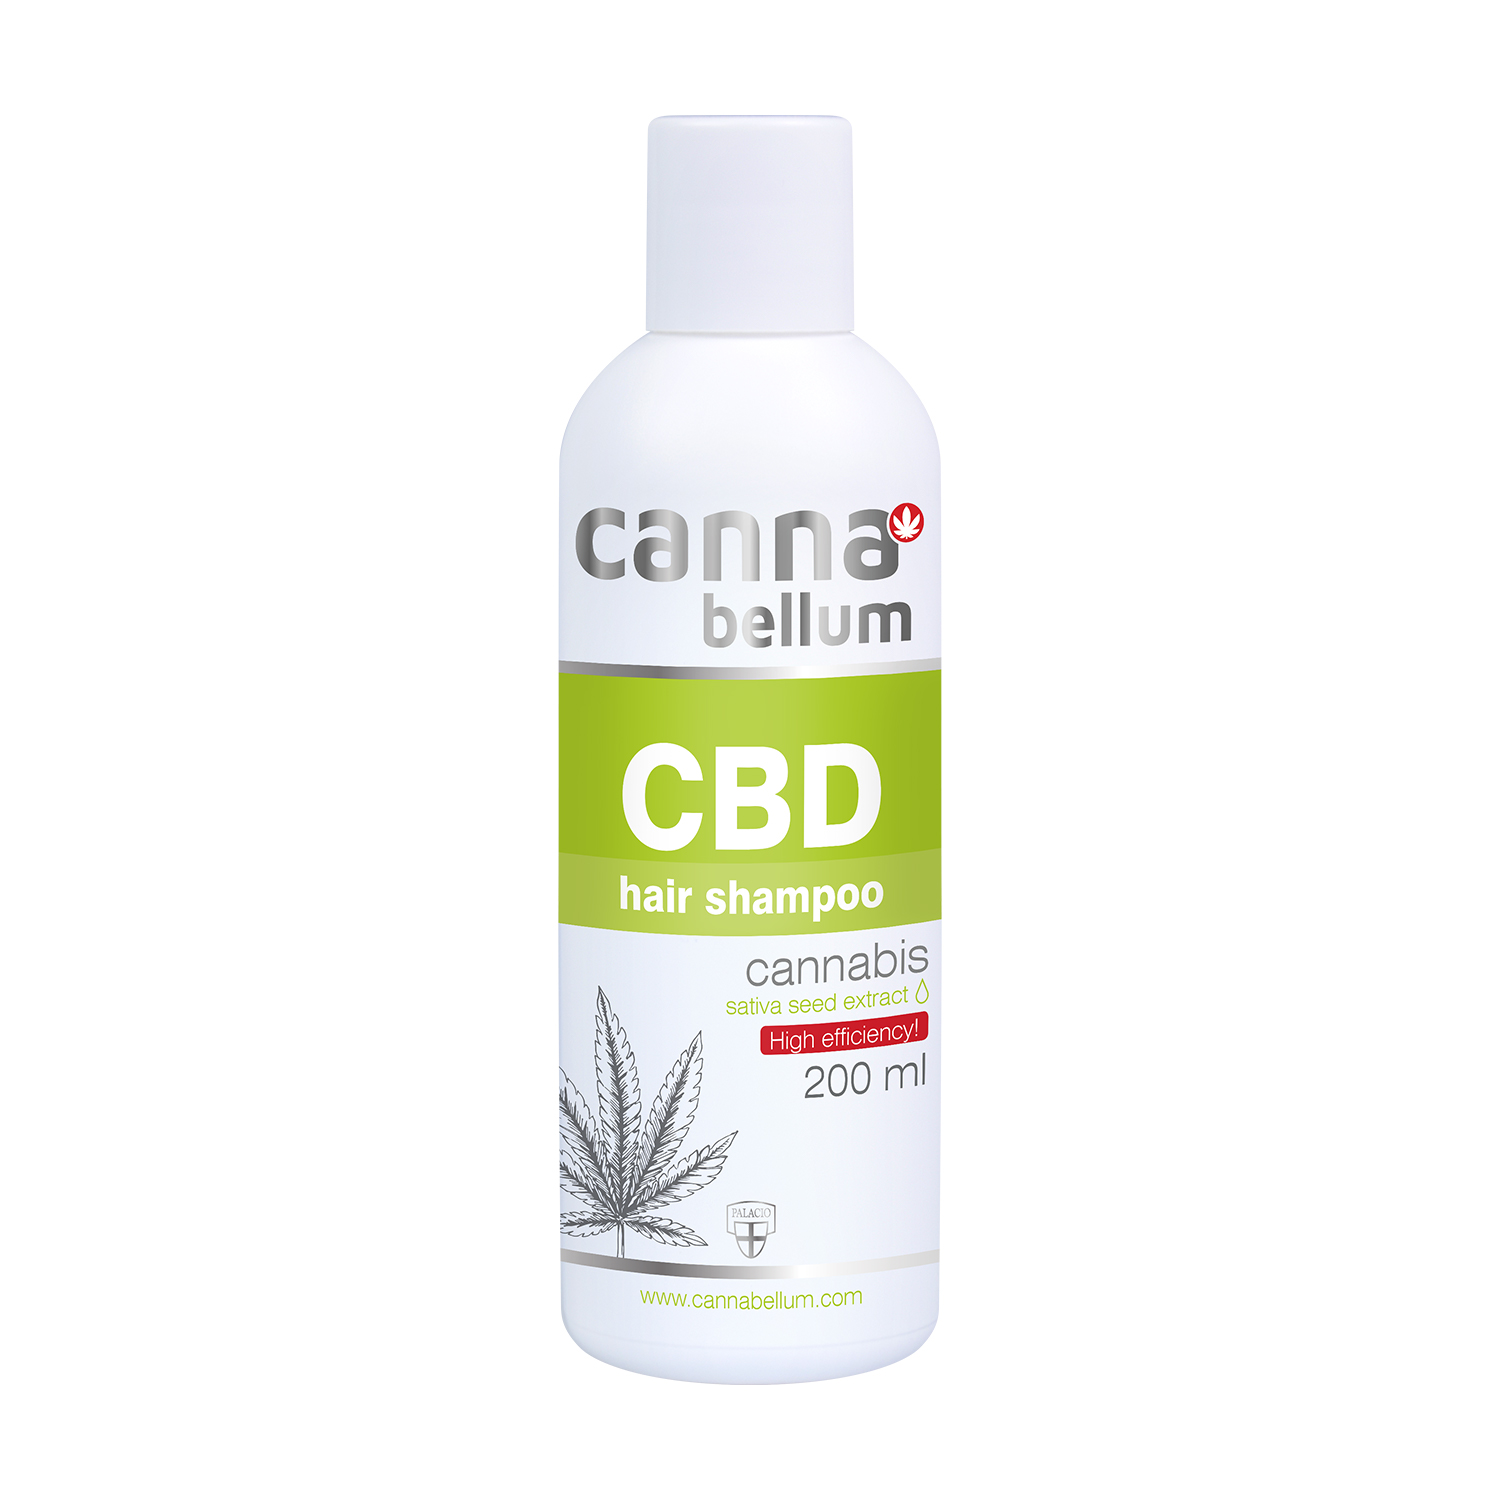 Cannabellum CBD hair shampoo 200ml P1251 WEB 282